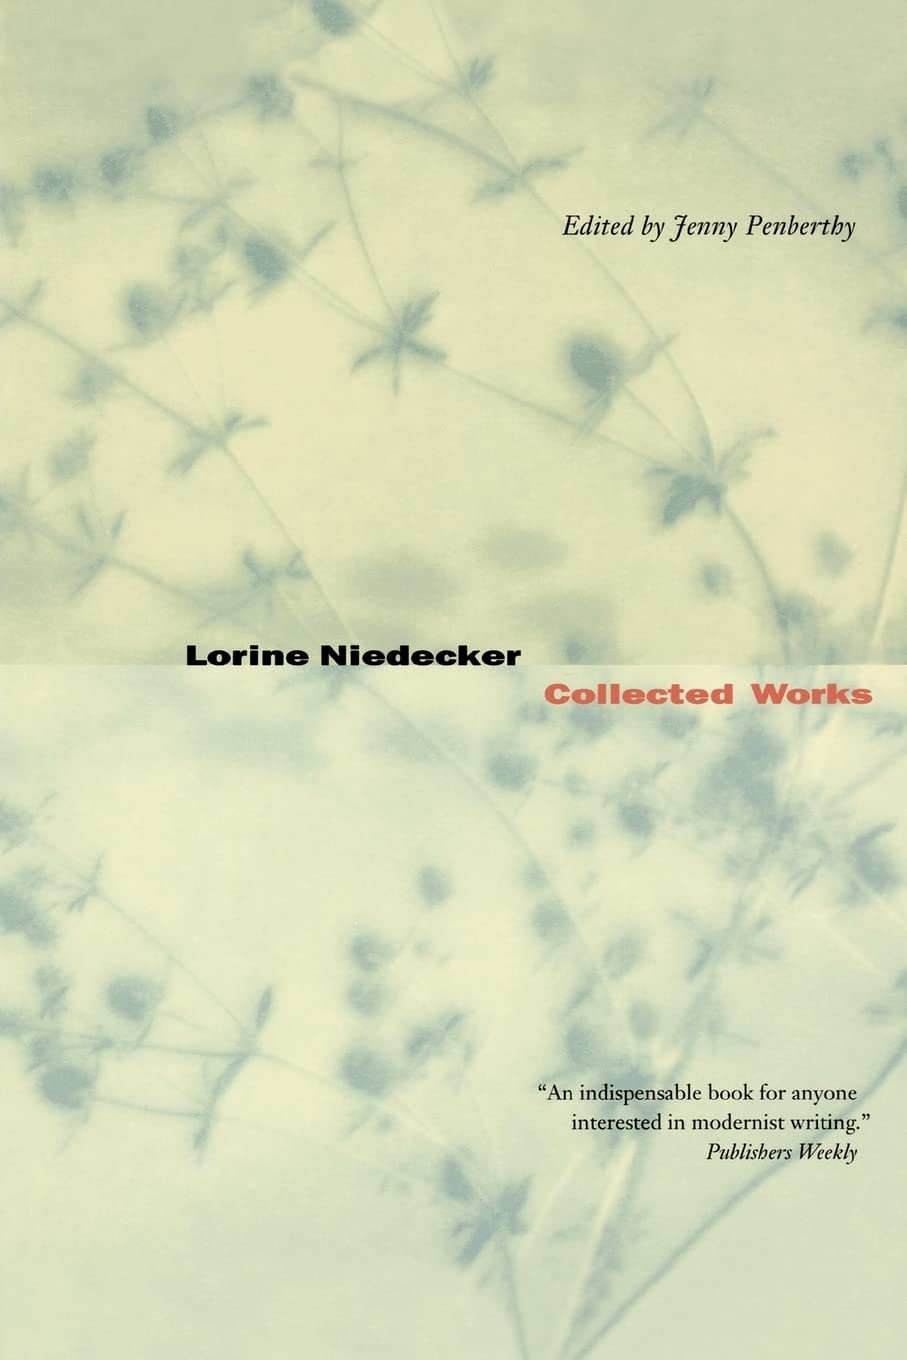 Collected Works, by Lorine Niedecker